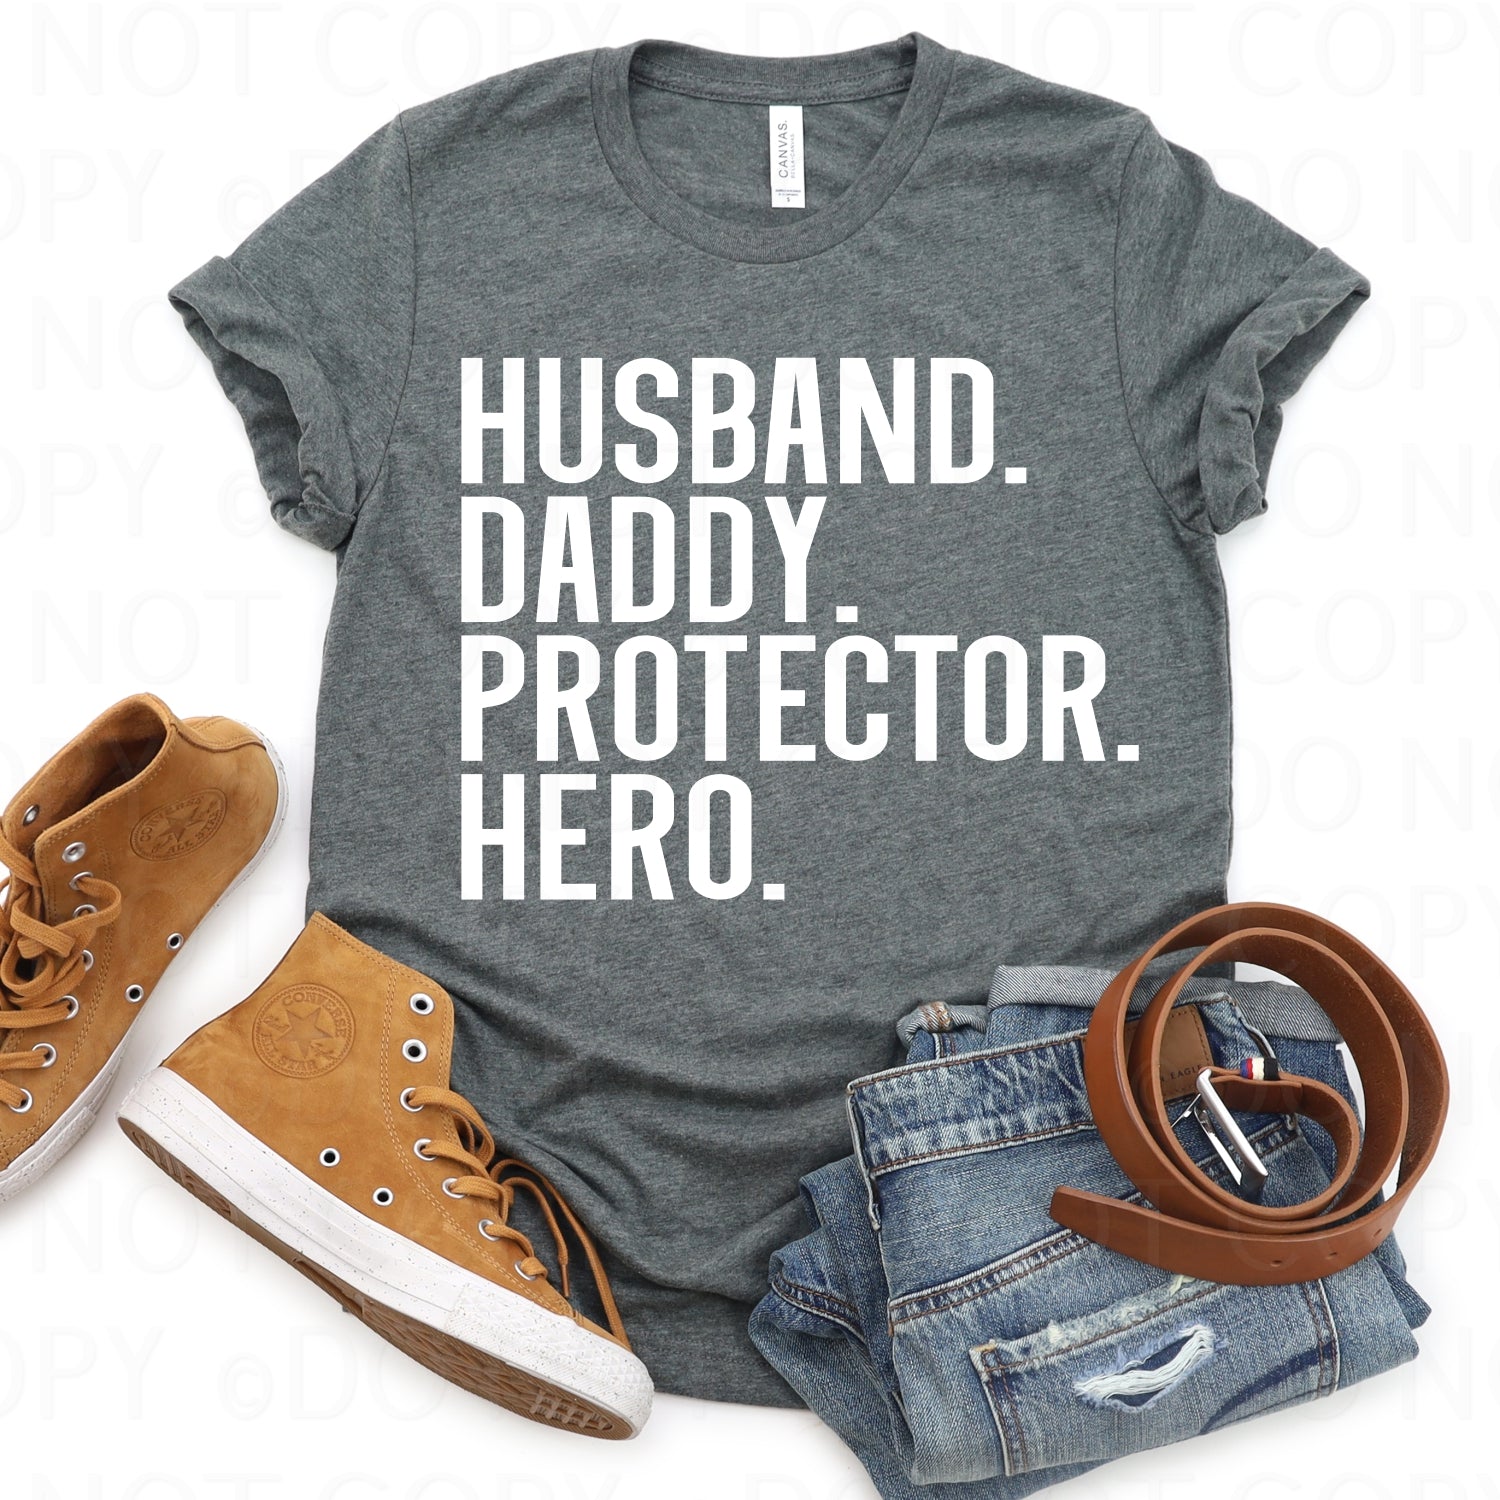 Husband Daddy Hero